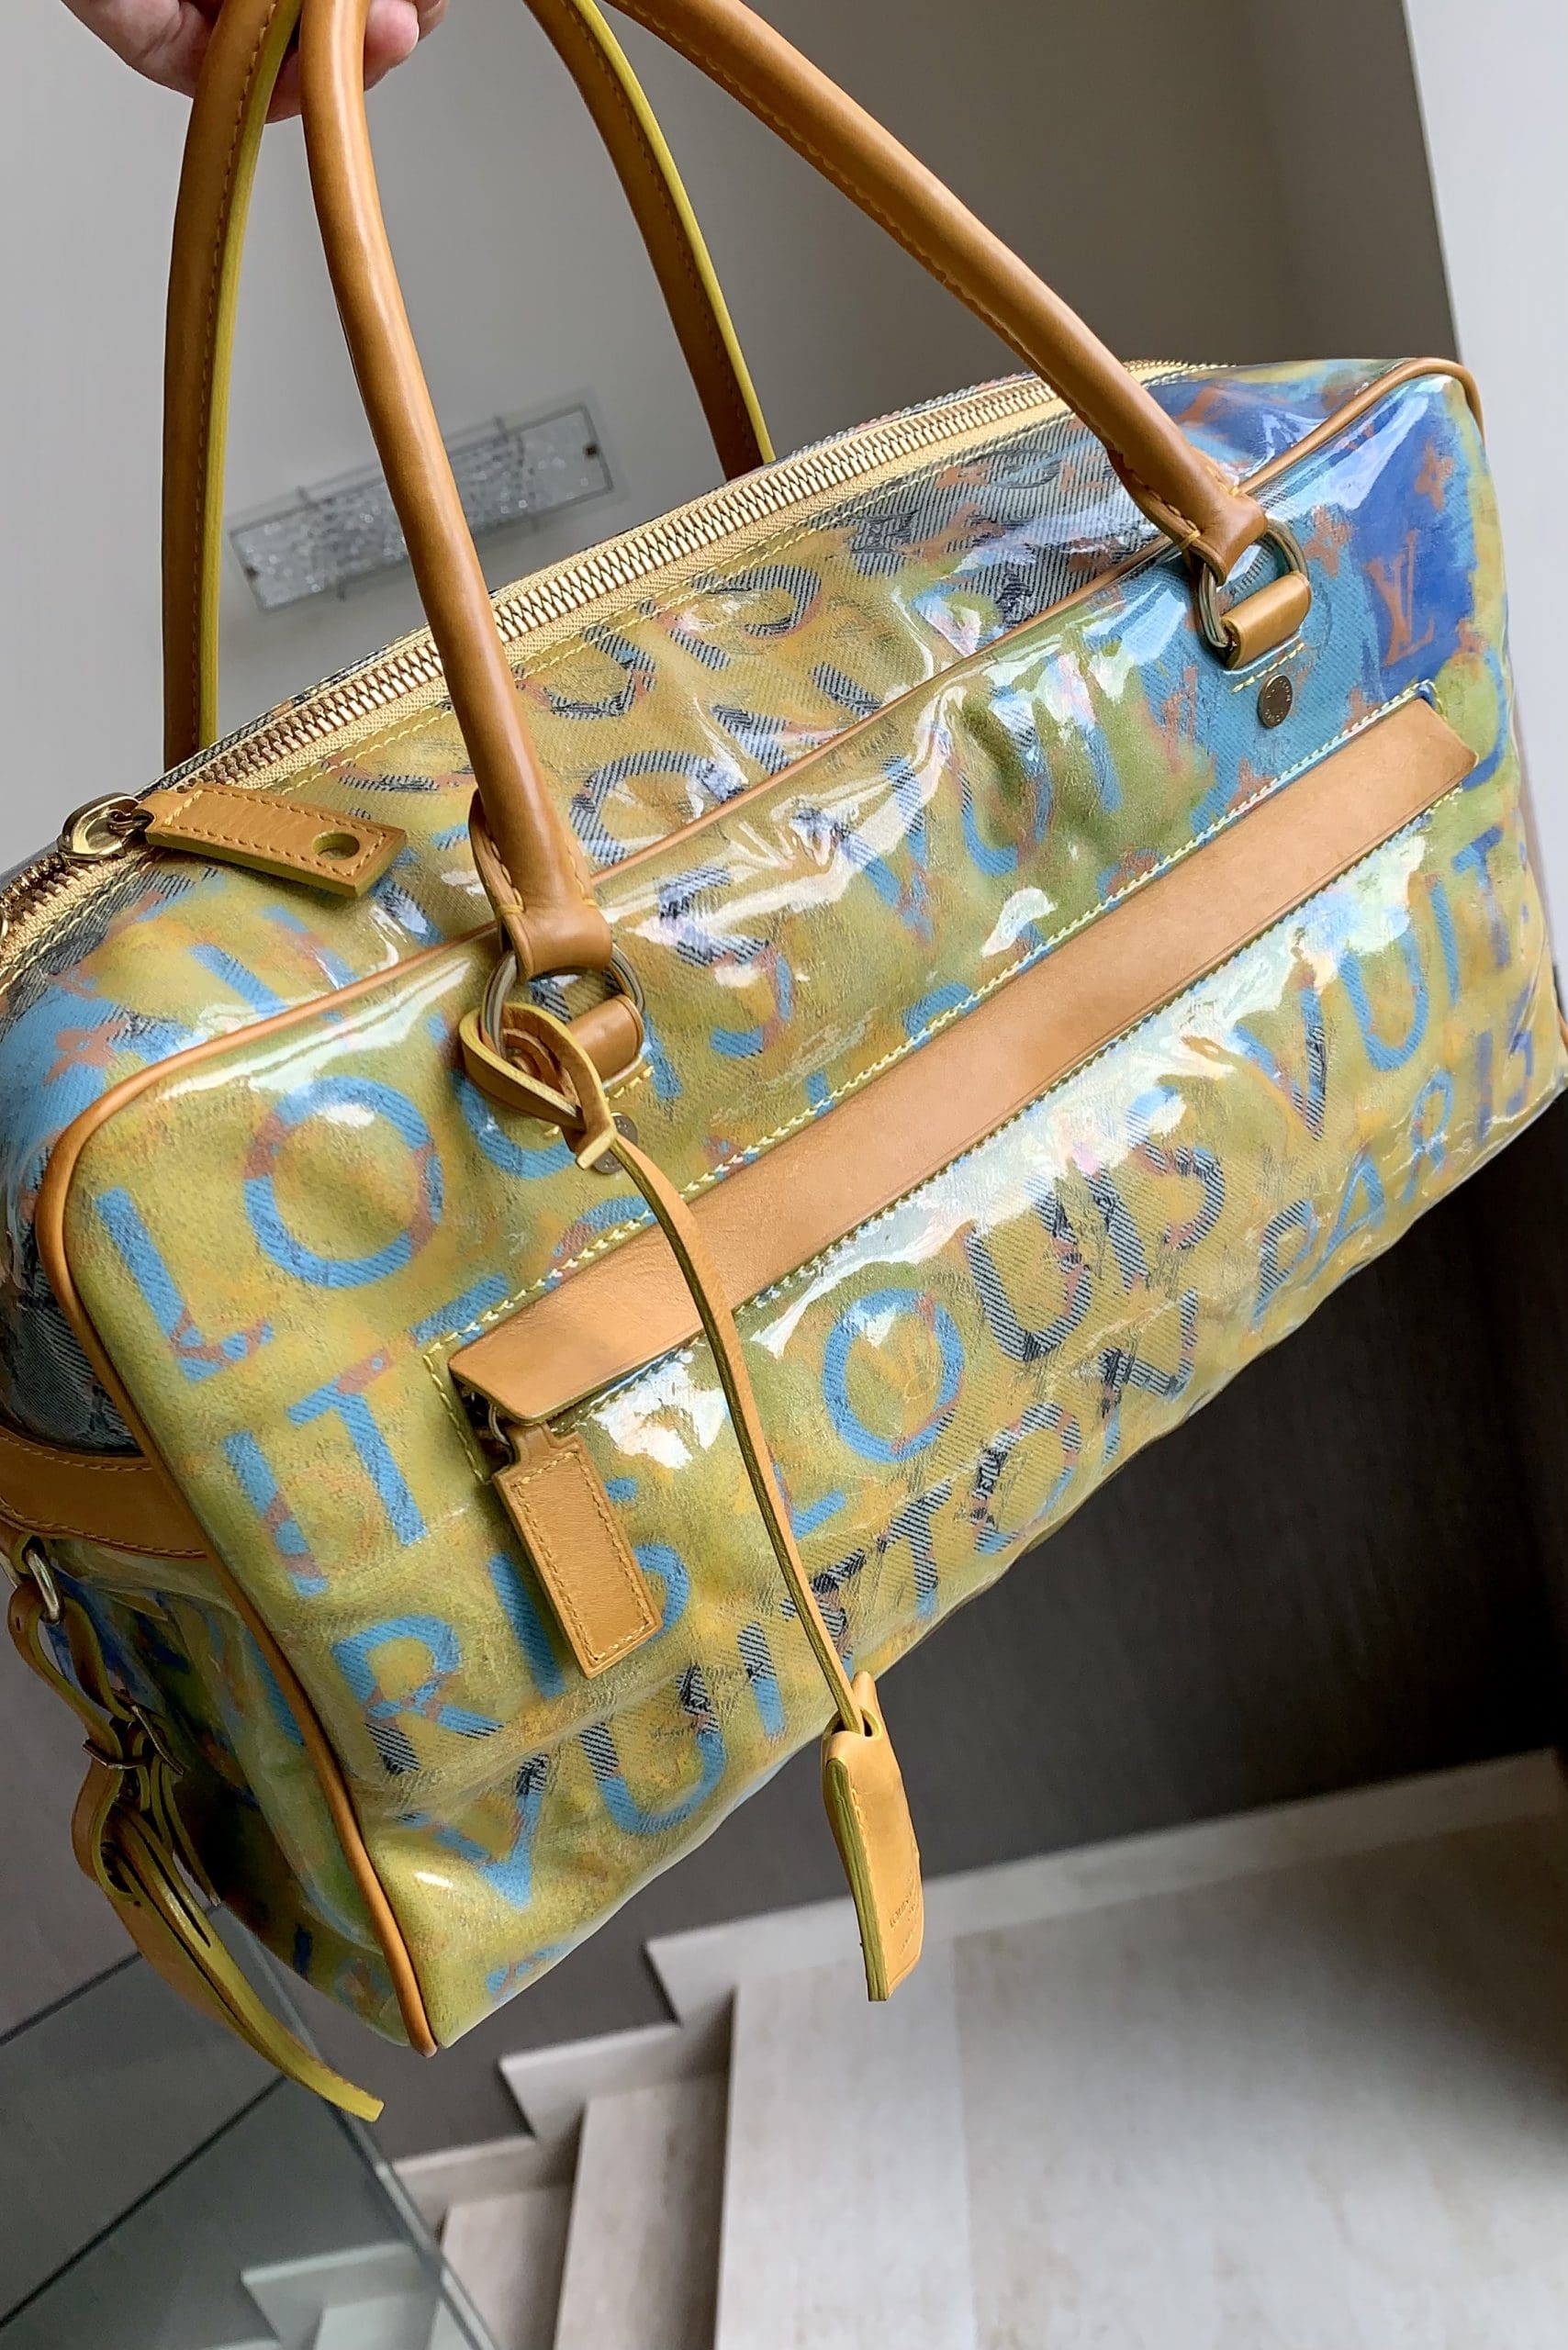 Louis Vuitton 2008 Prince Jaune Denim Weekender Pulp Bag limited edition -  Reetzy